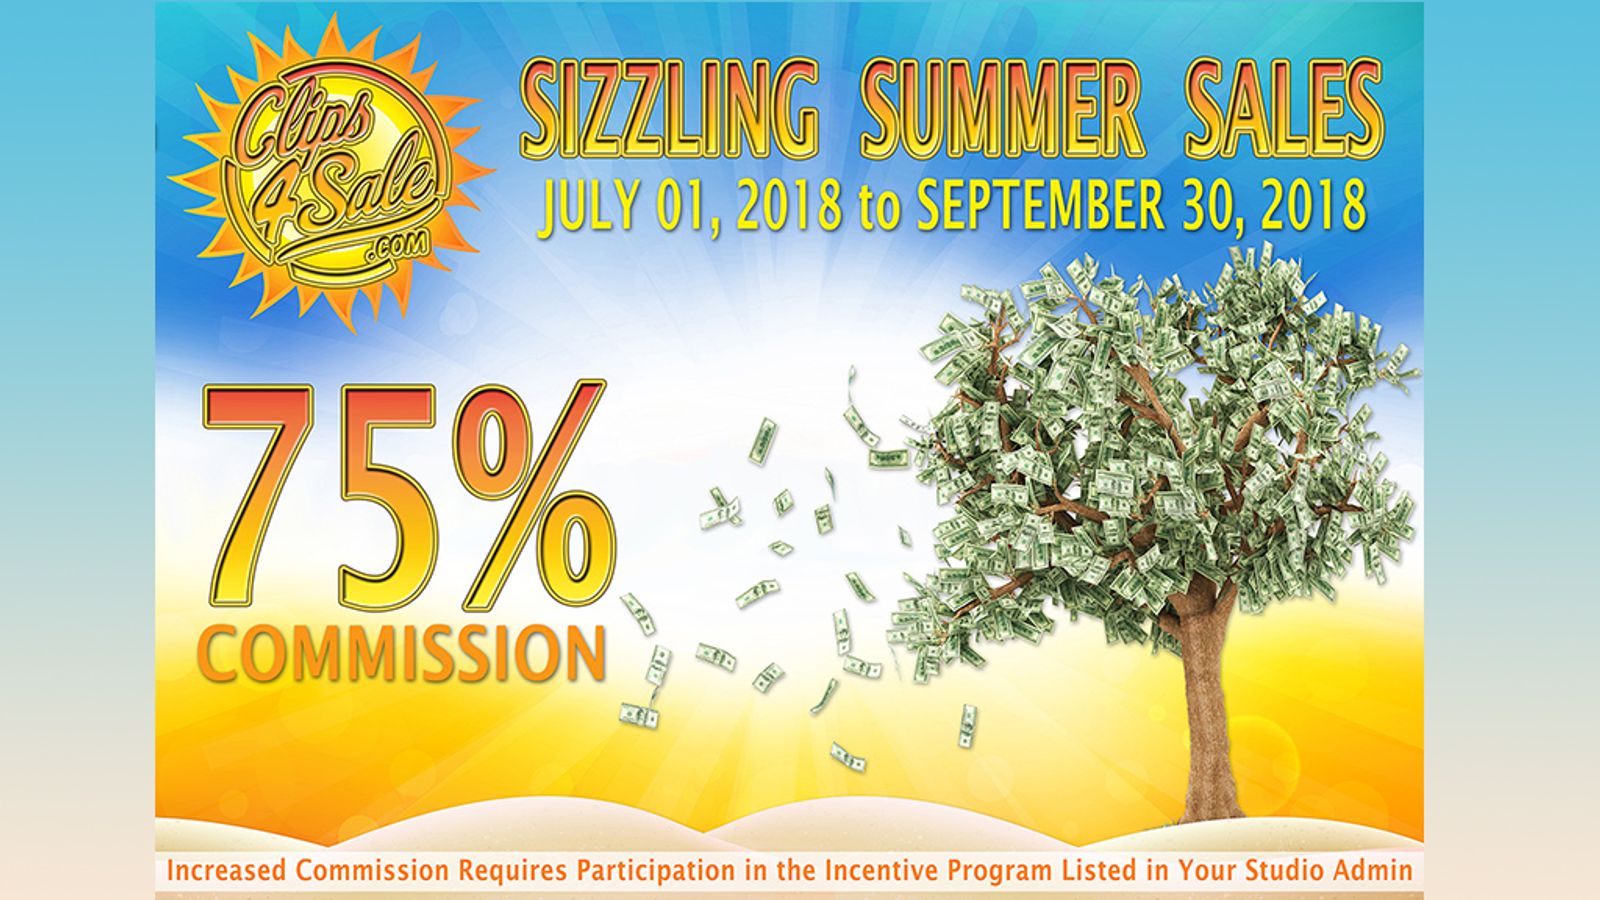 Clips4Sale Offering Summer Sales Incentive Program